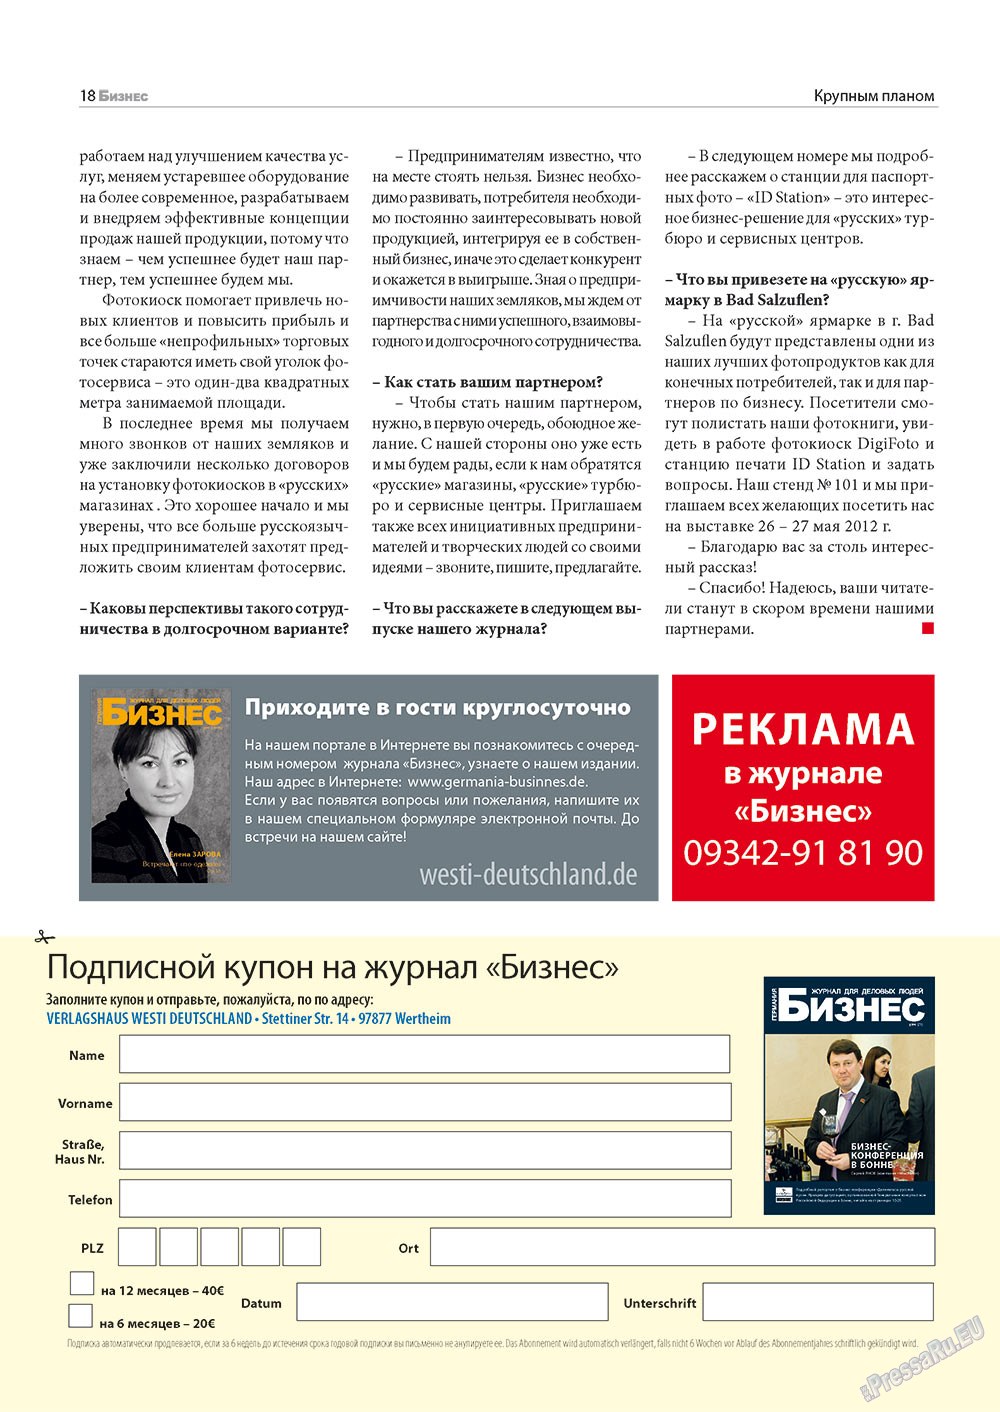 Бизнес (журнал). 2012 год, номер 3, стр. 18